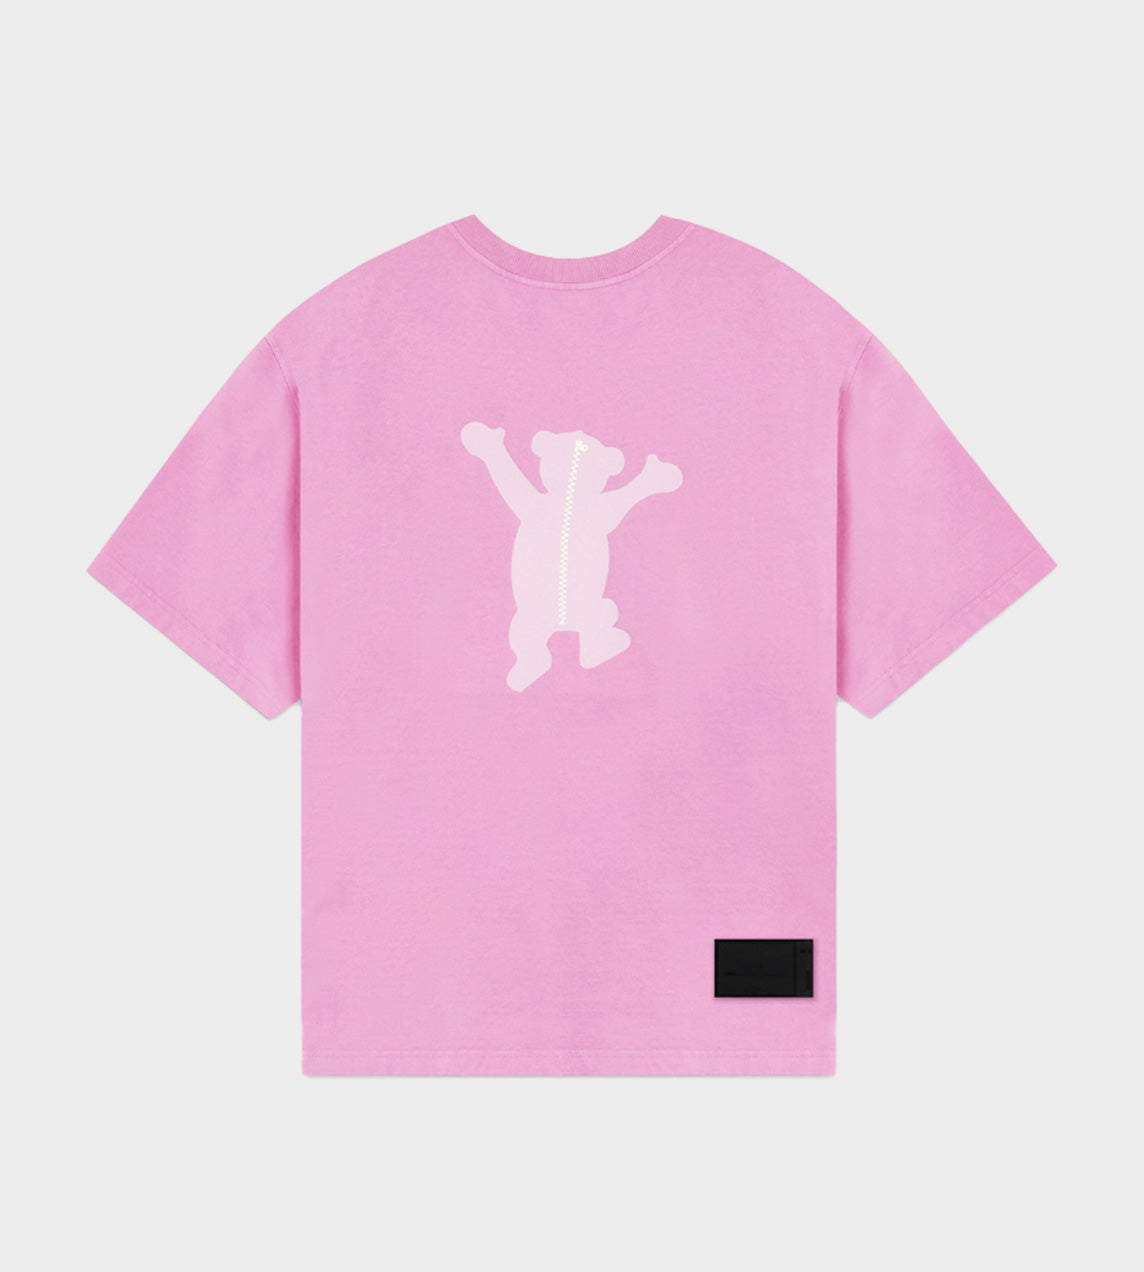 WE11DONE - Teddy Logo T-Shirt Pink